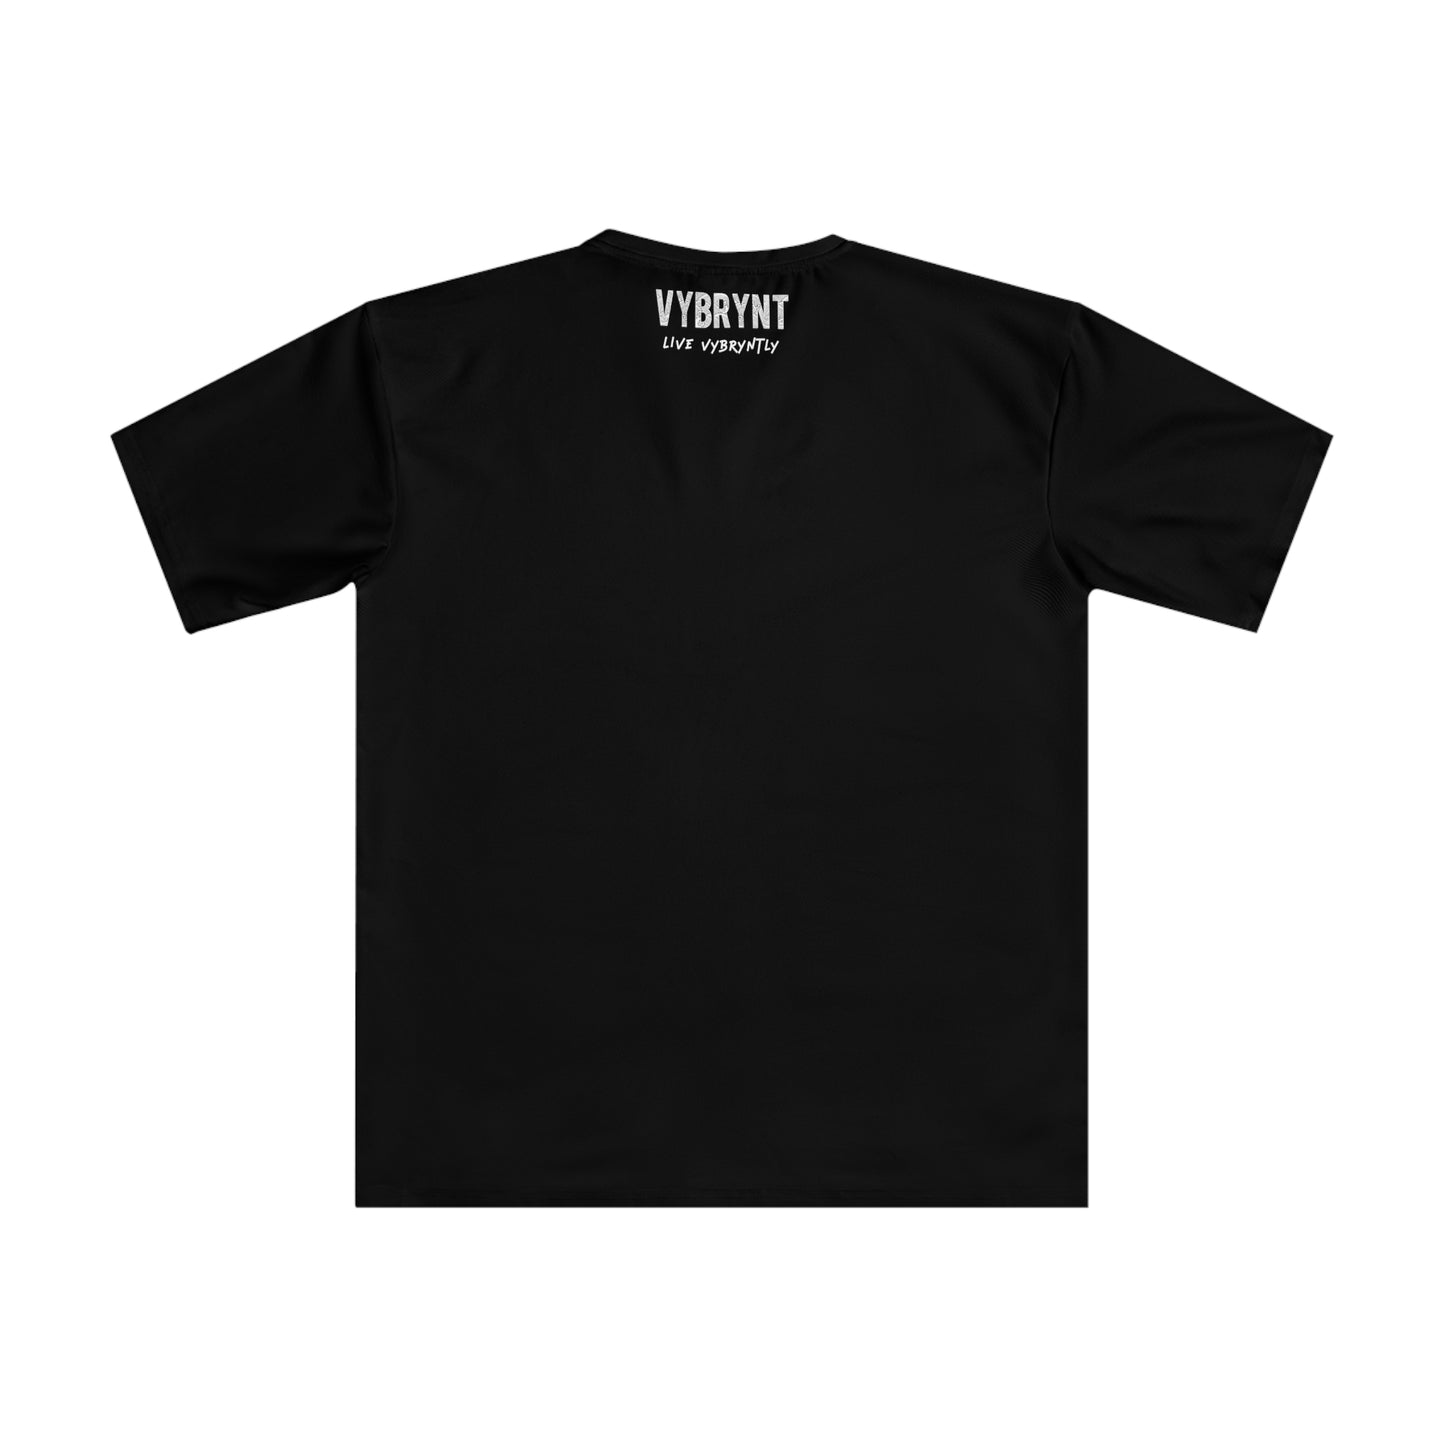 Op-trix: Shapes in Motion Men's Black T-shirt